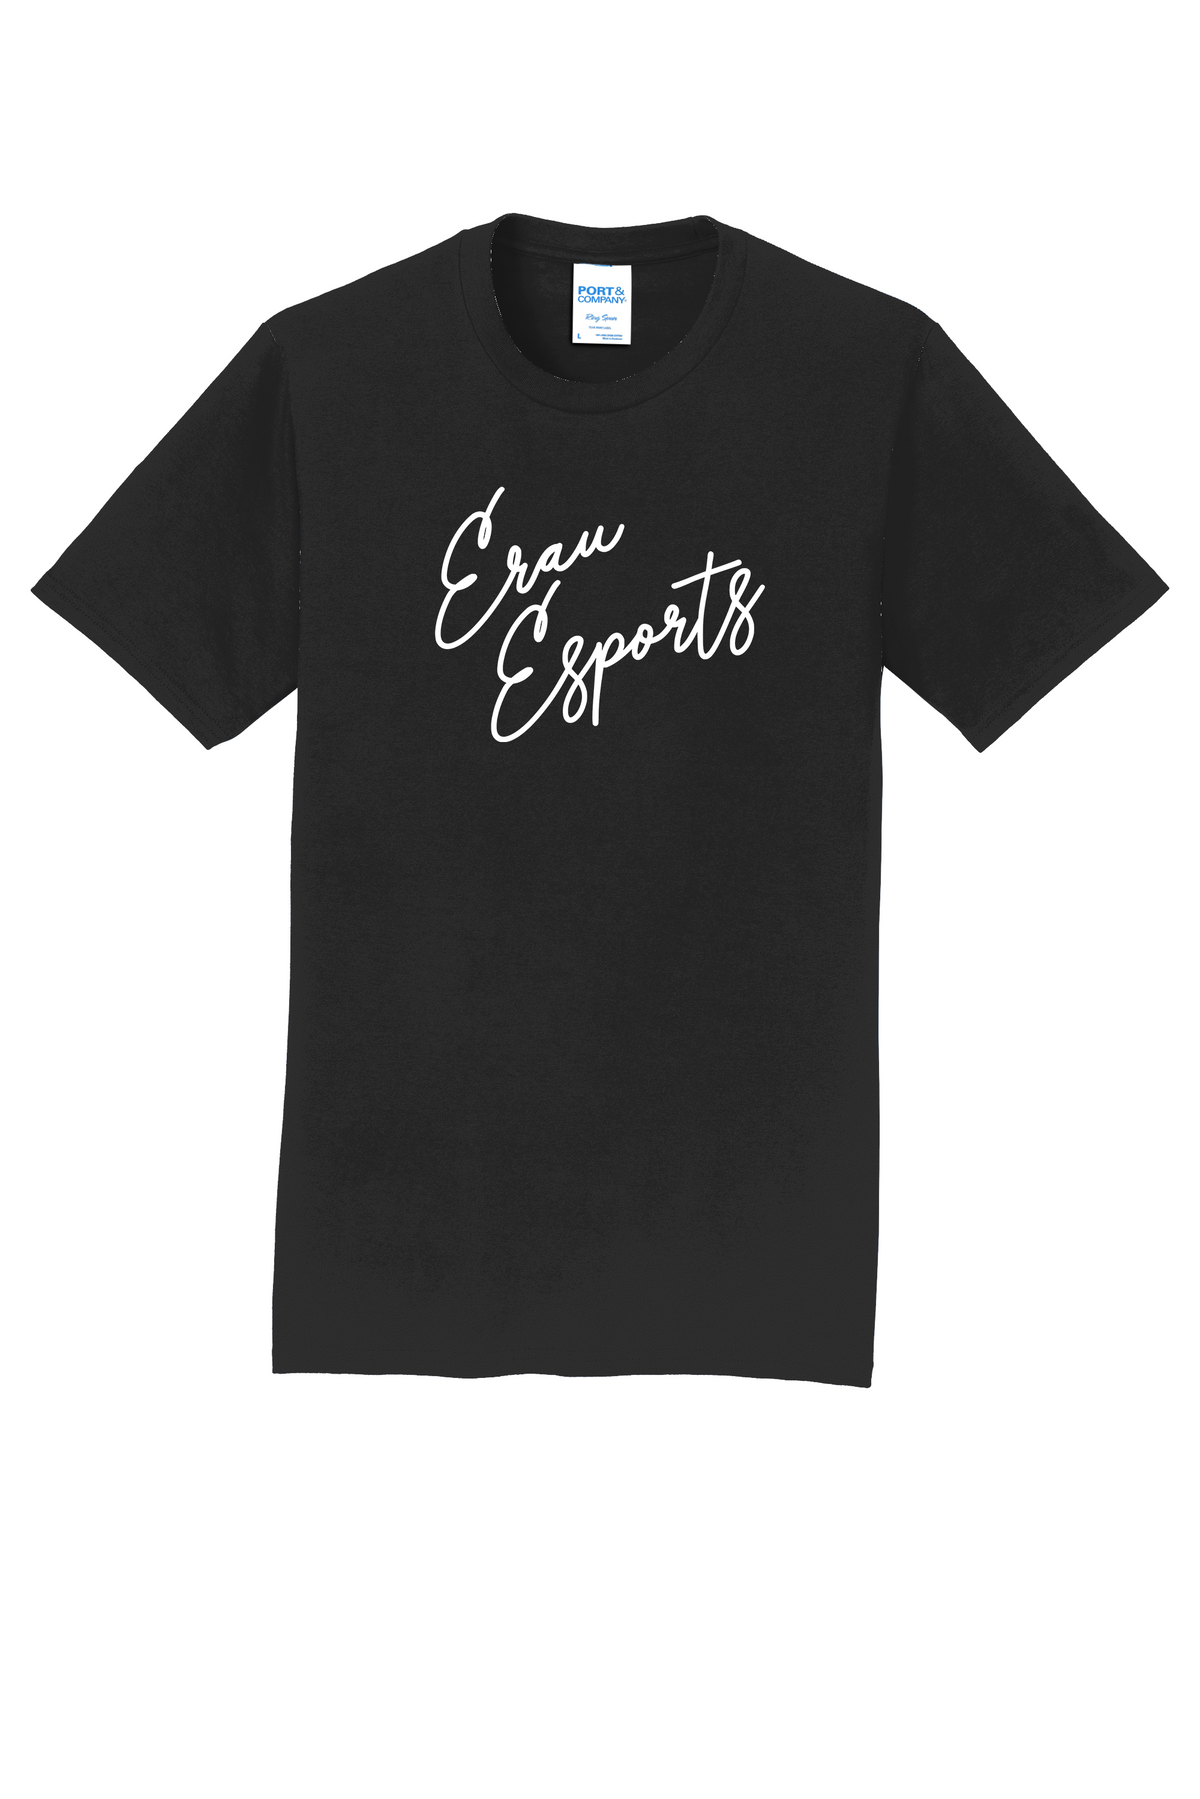 ERAU Esports | Street Series | [DTF] Unisex Short Sleeve T-Shirt {#ERAU001}